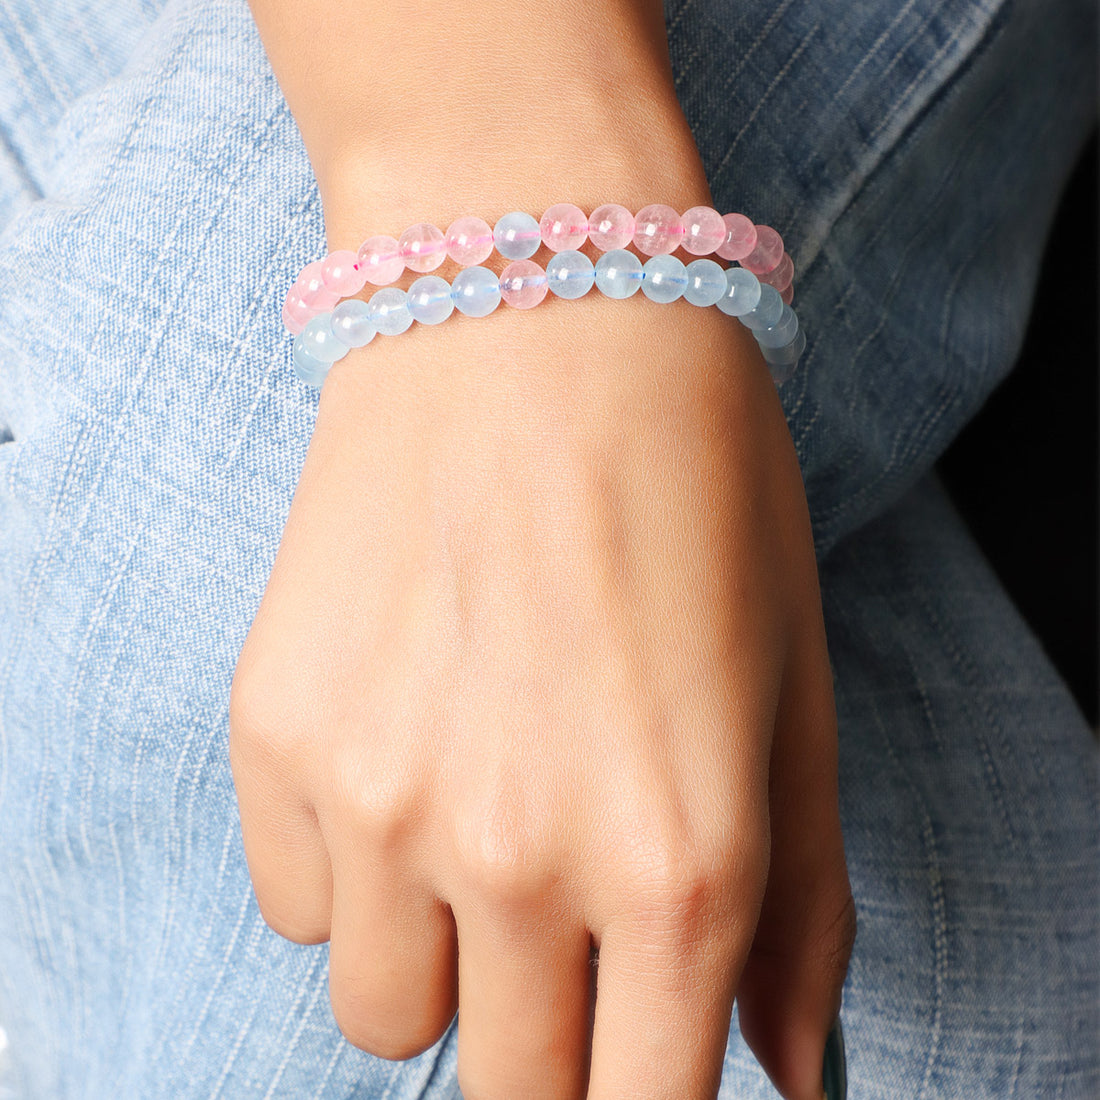 Set of Aquamarine and Rose Quartz gemstone bracelets, beautifully arranged to reflect a perfect balance of colors and positive energy.